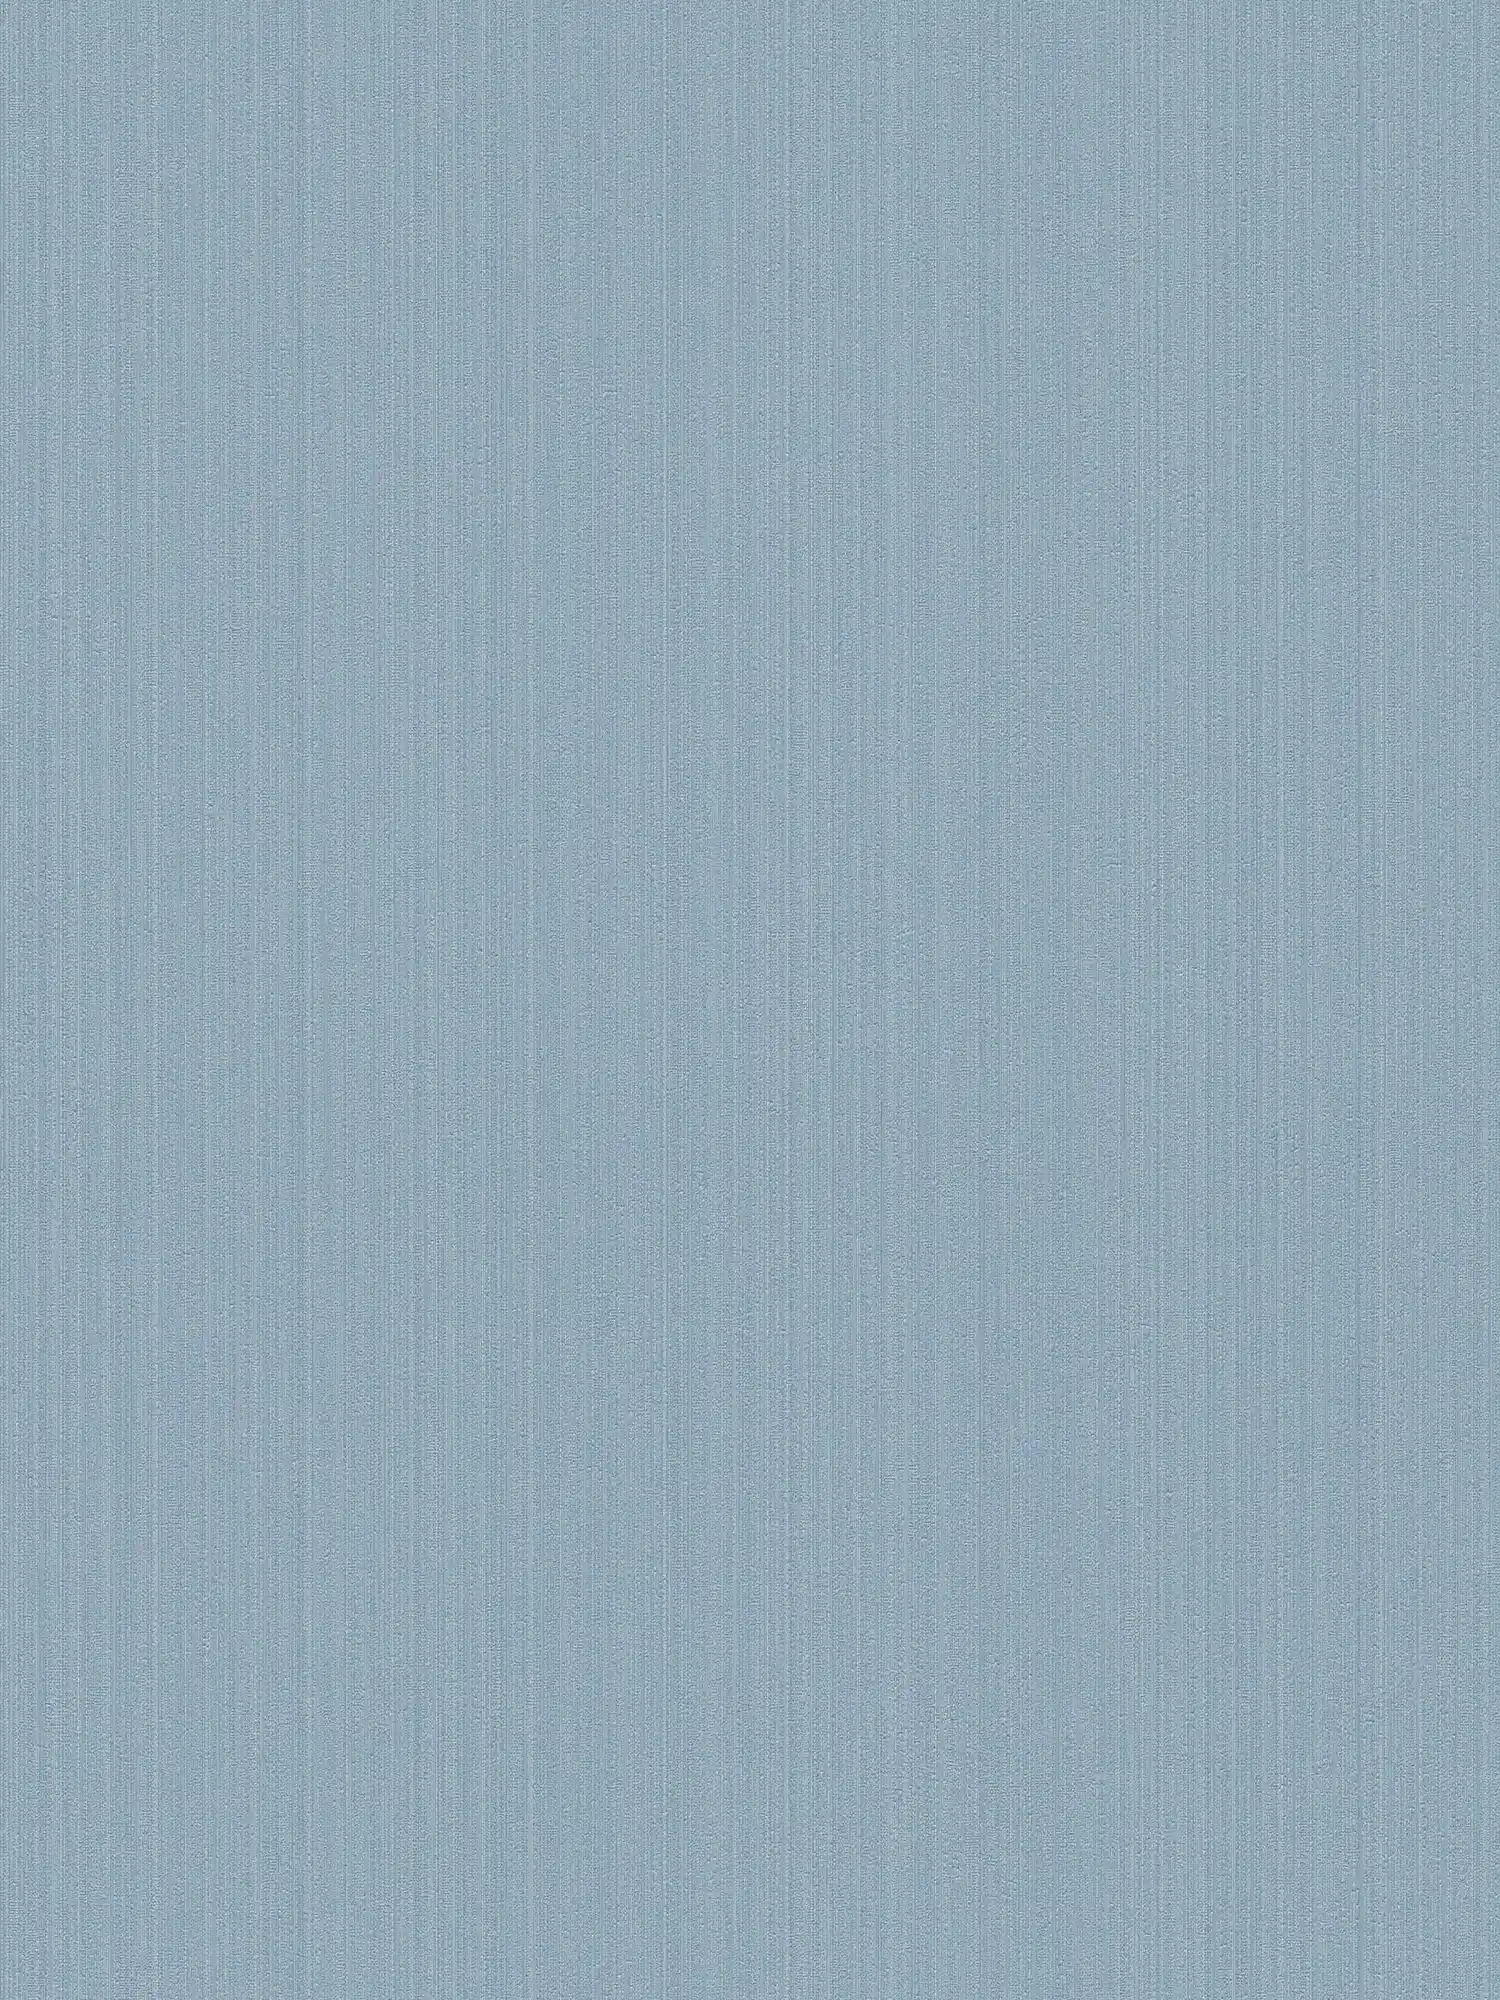 Papel pintado no tejido azul liso, seda mate con efecto de textura
